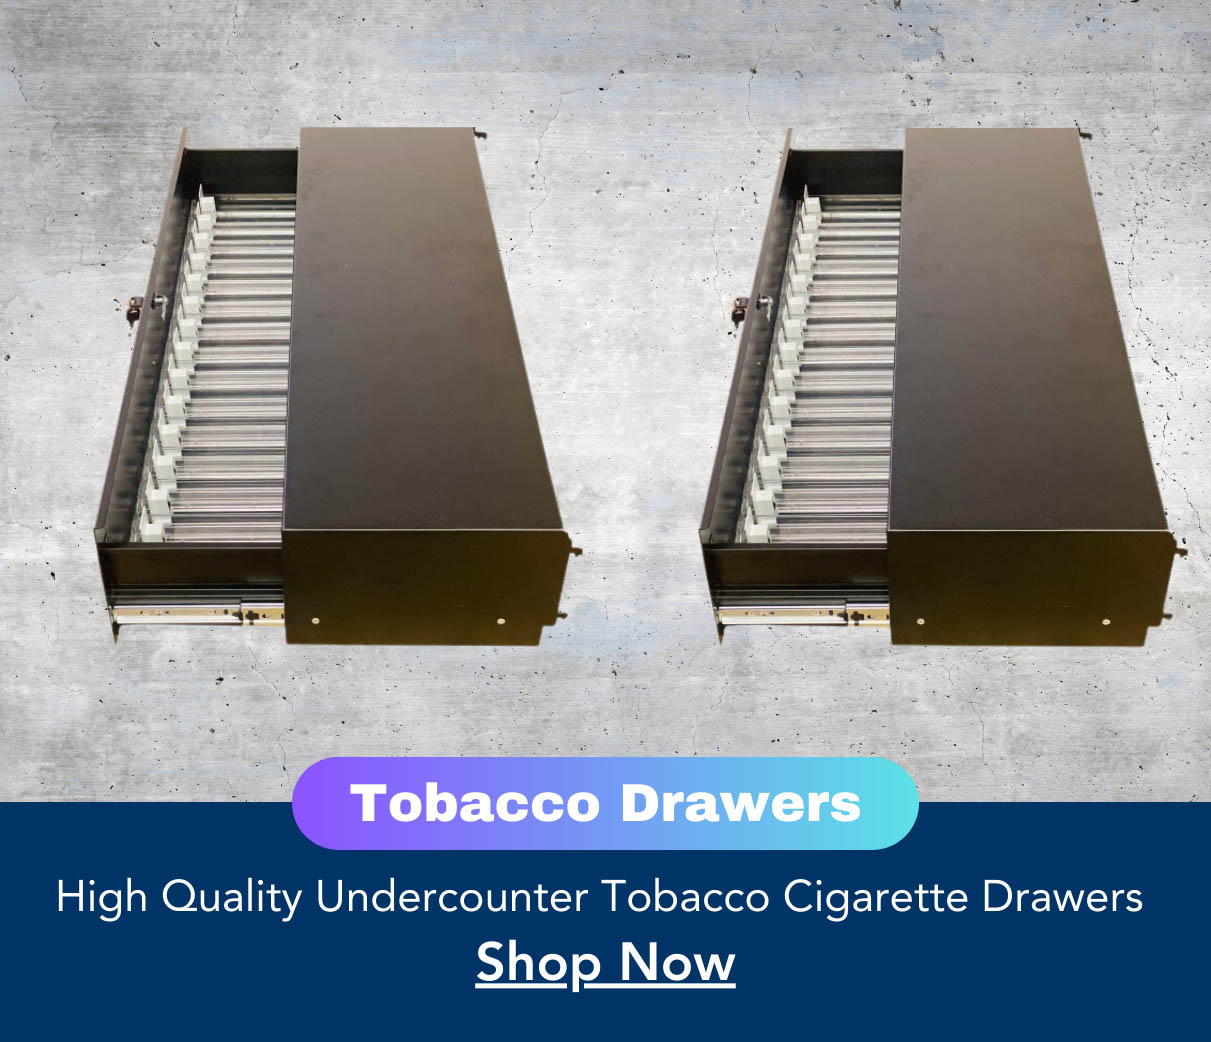 Tobacco Drawers